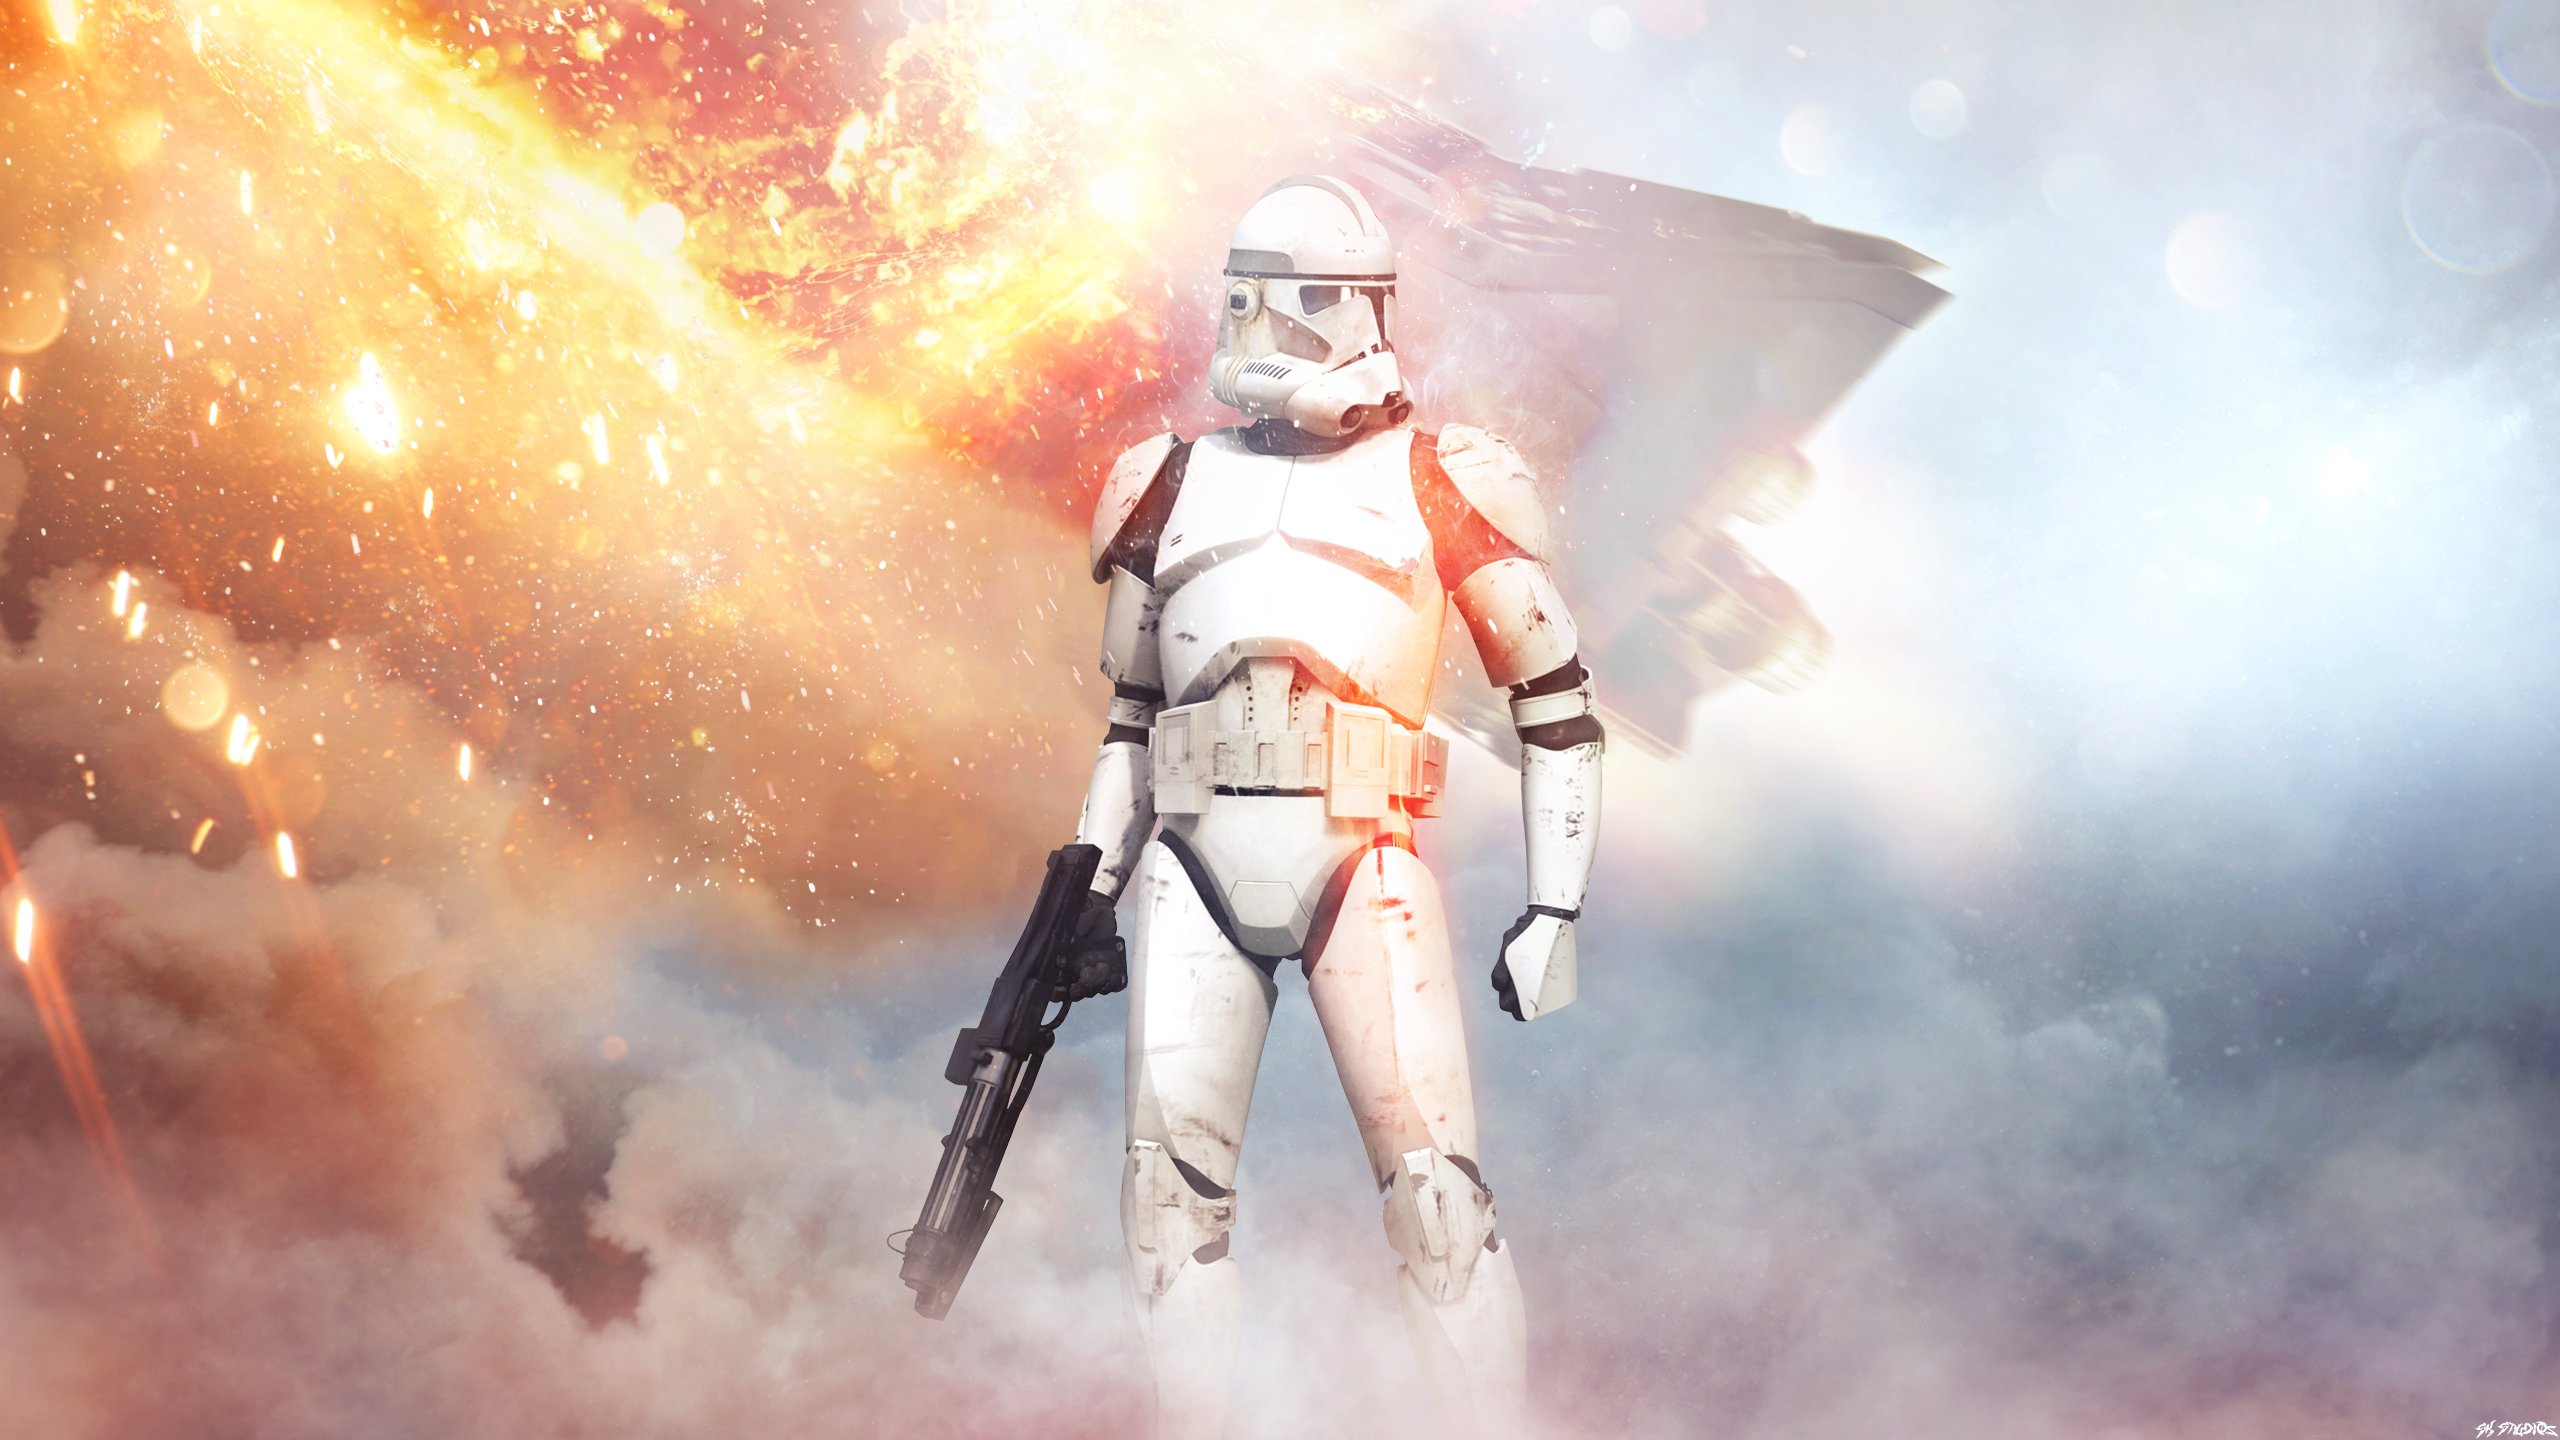 star wars battlefront 1 pc free download